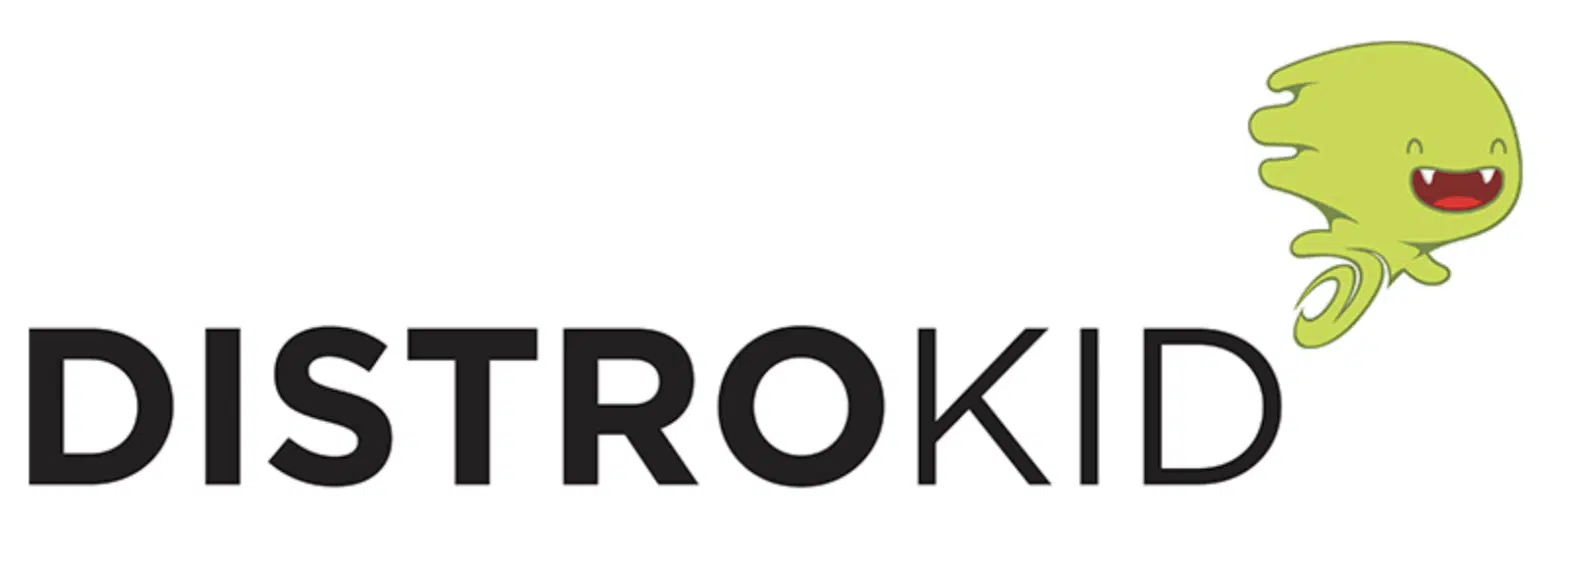 DistroKid 2 - Unison